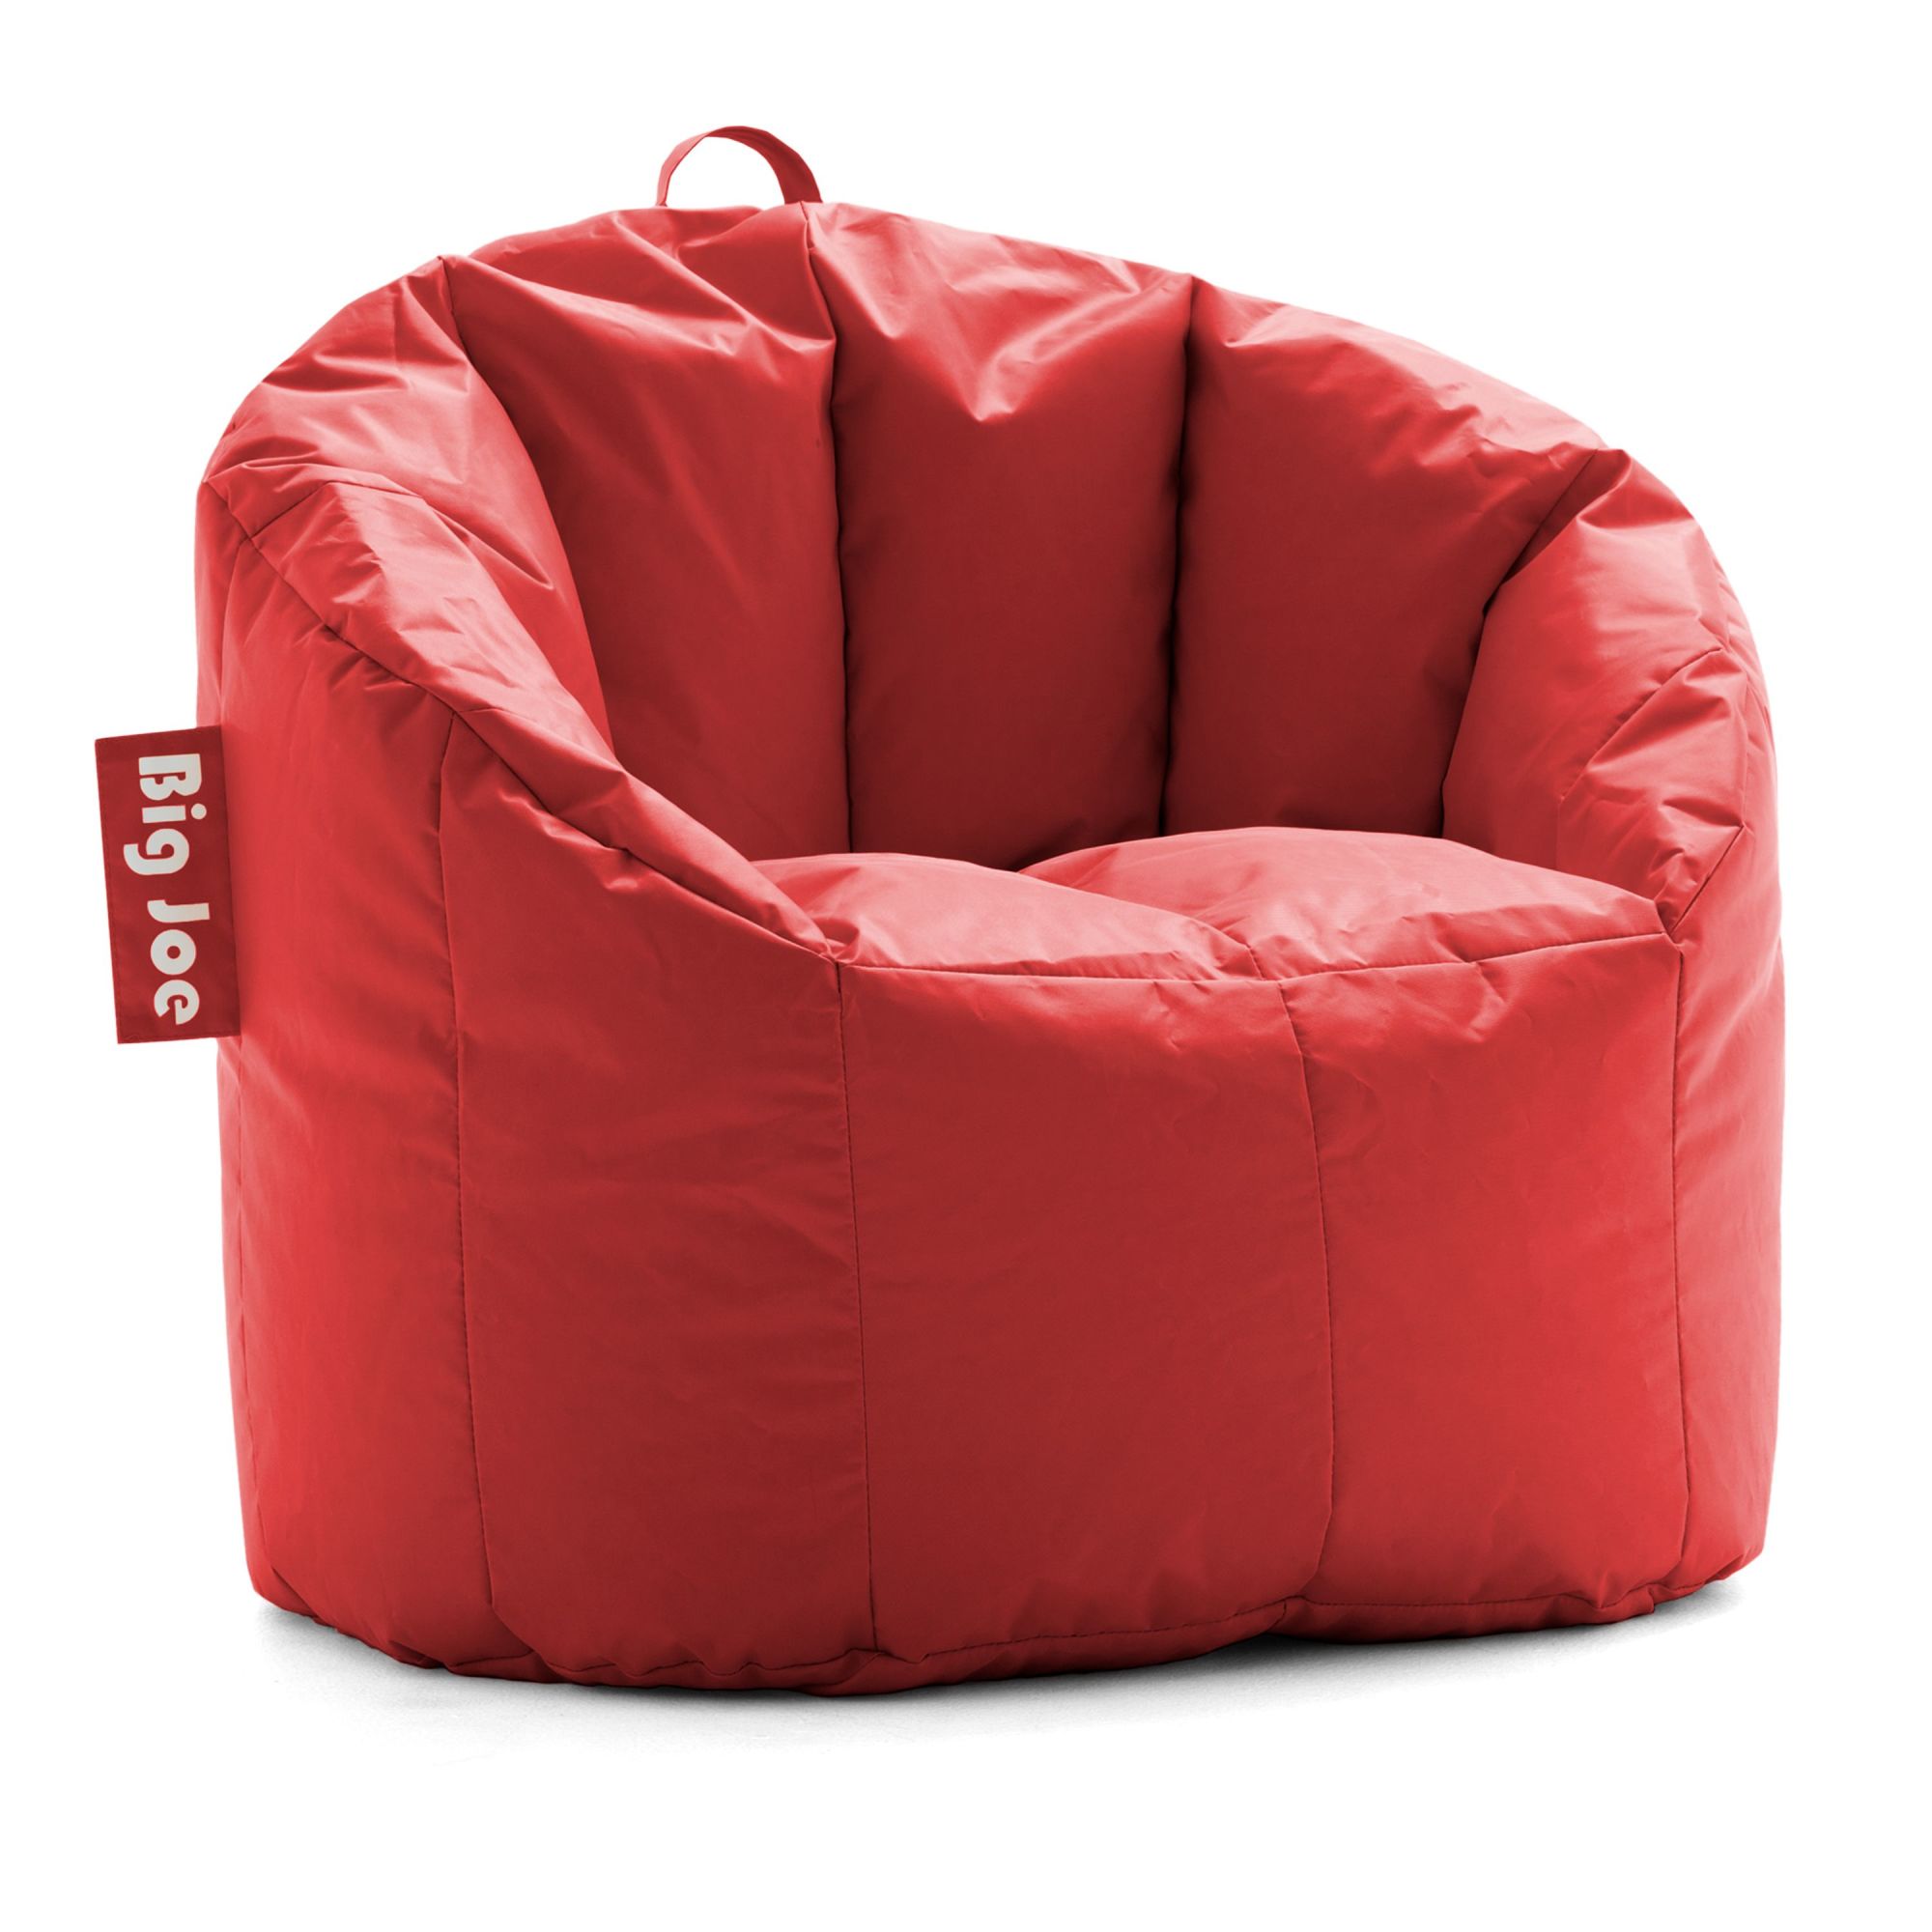 Big Joe Milano Bean Bag Chair, Red Smartmax, Durable Polyester Nylon Blend, 2.5 feet - image 3 of 8